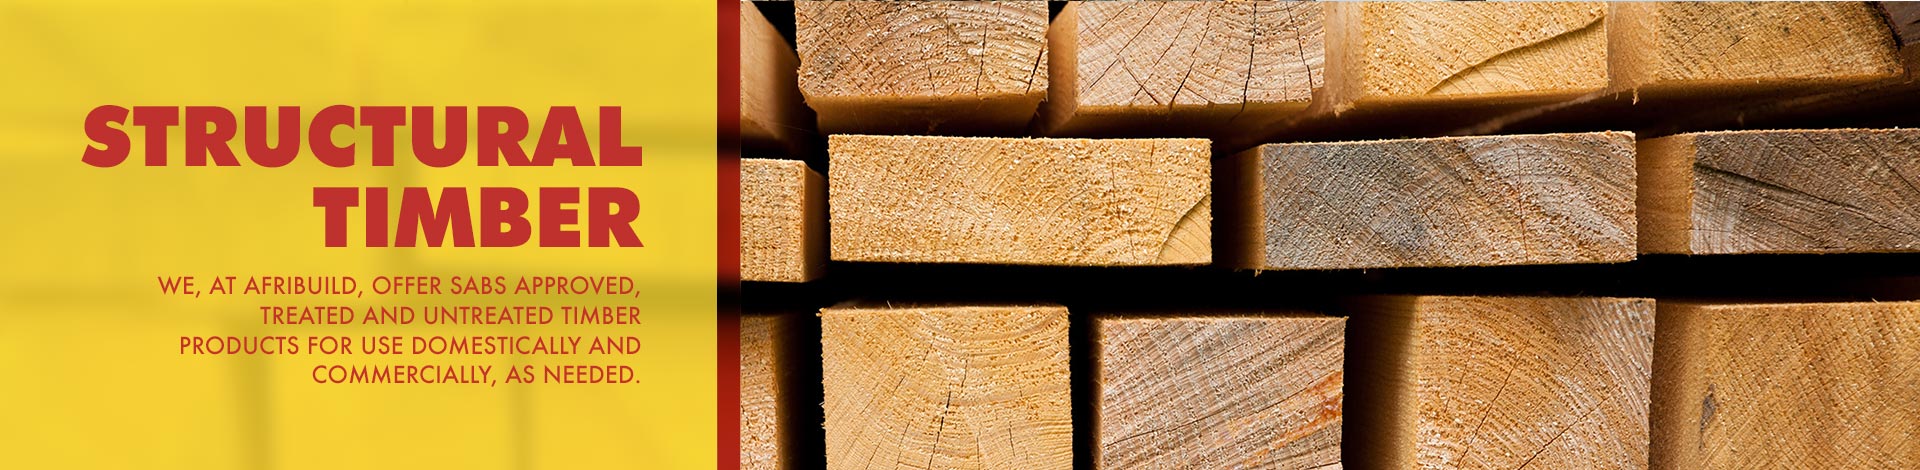 Afribuild Structural Timber